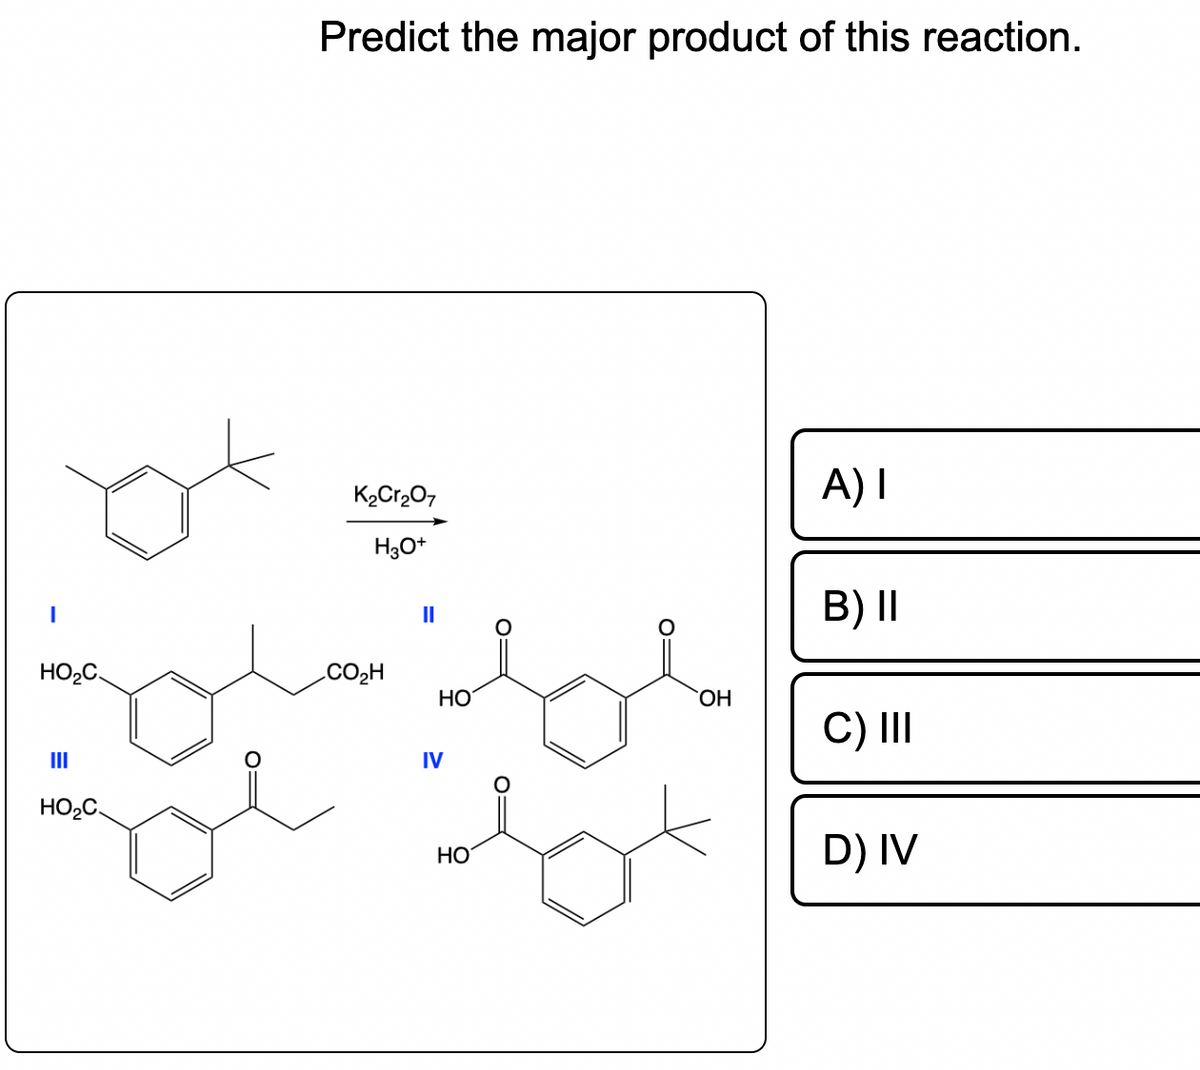 HO₂C
III
HO₂C
Predict the major product of this reaction.
K₂Cr₂O7
H3O+
CO₂H
||
HO
IV
HO
OH
A) I
B) II
C) III
D) IV